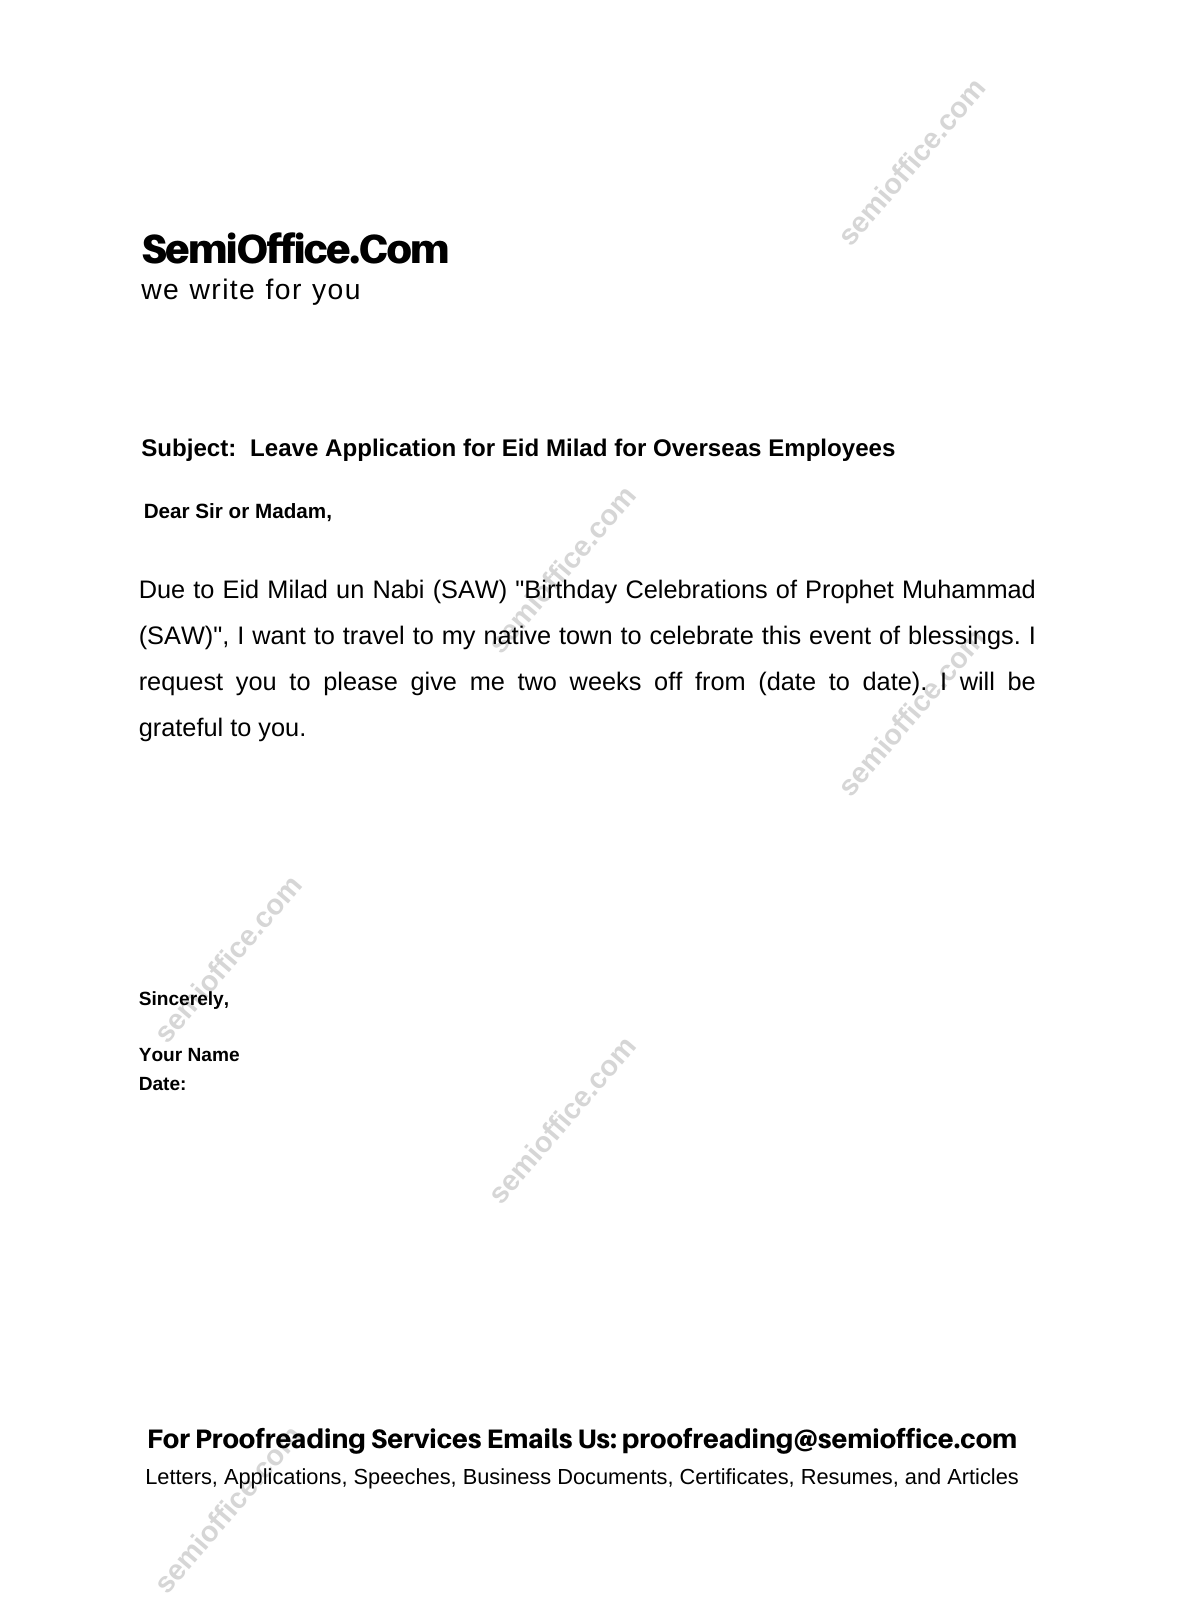 Leave Application for Eid Milad Un Nabi (SAW)